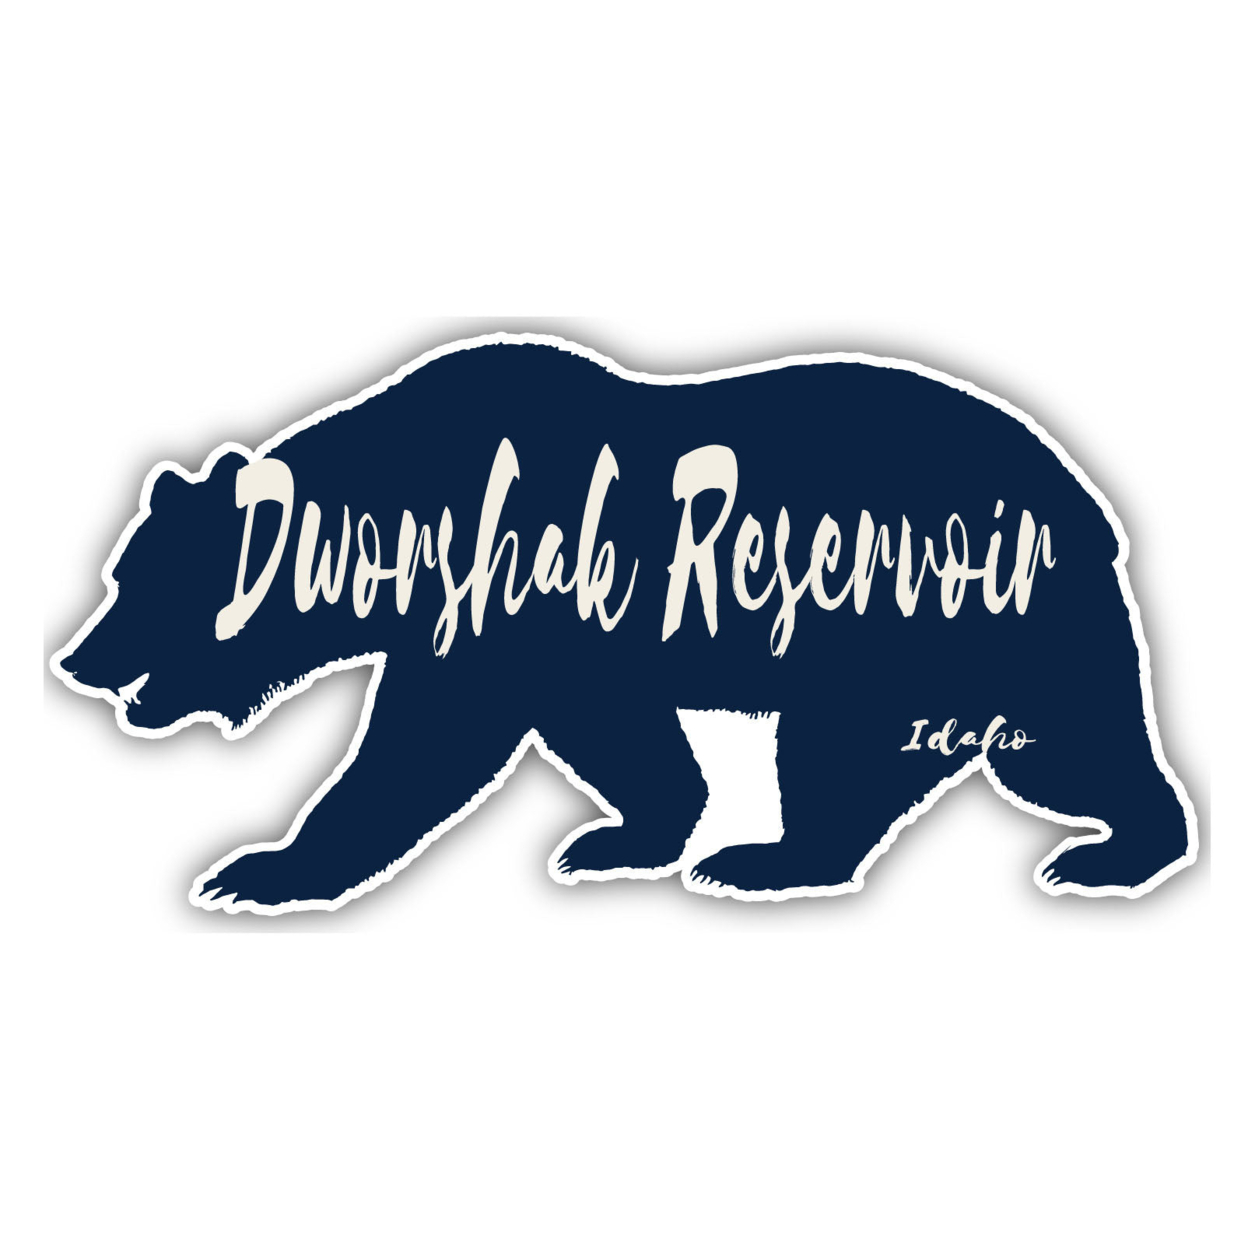 Dworshak Reservoir Idaho Souvenir Decorative Stickers (Choose Theme And Size) - 4-Pack, 10-Inch, Camp Life